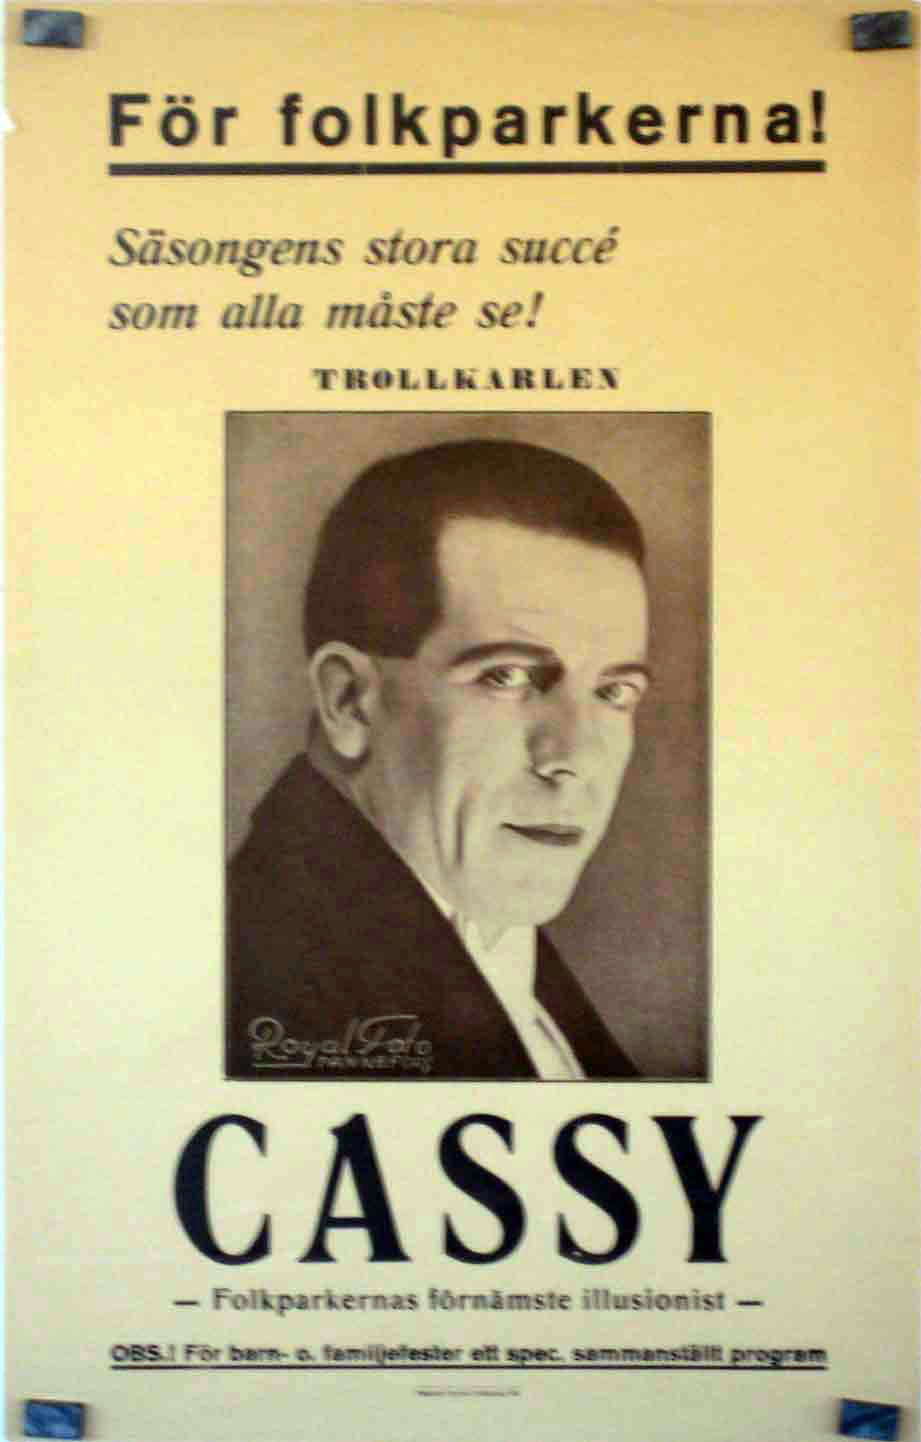 CASSY